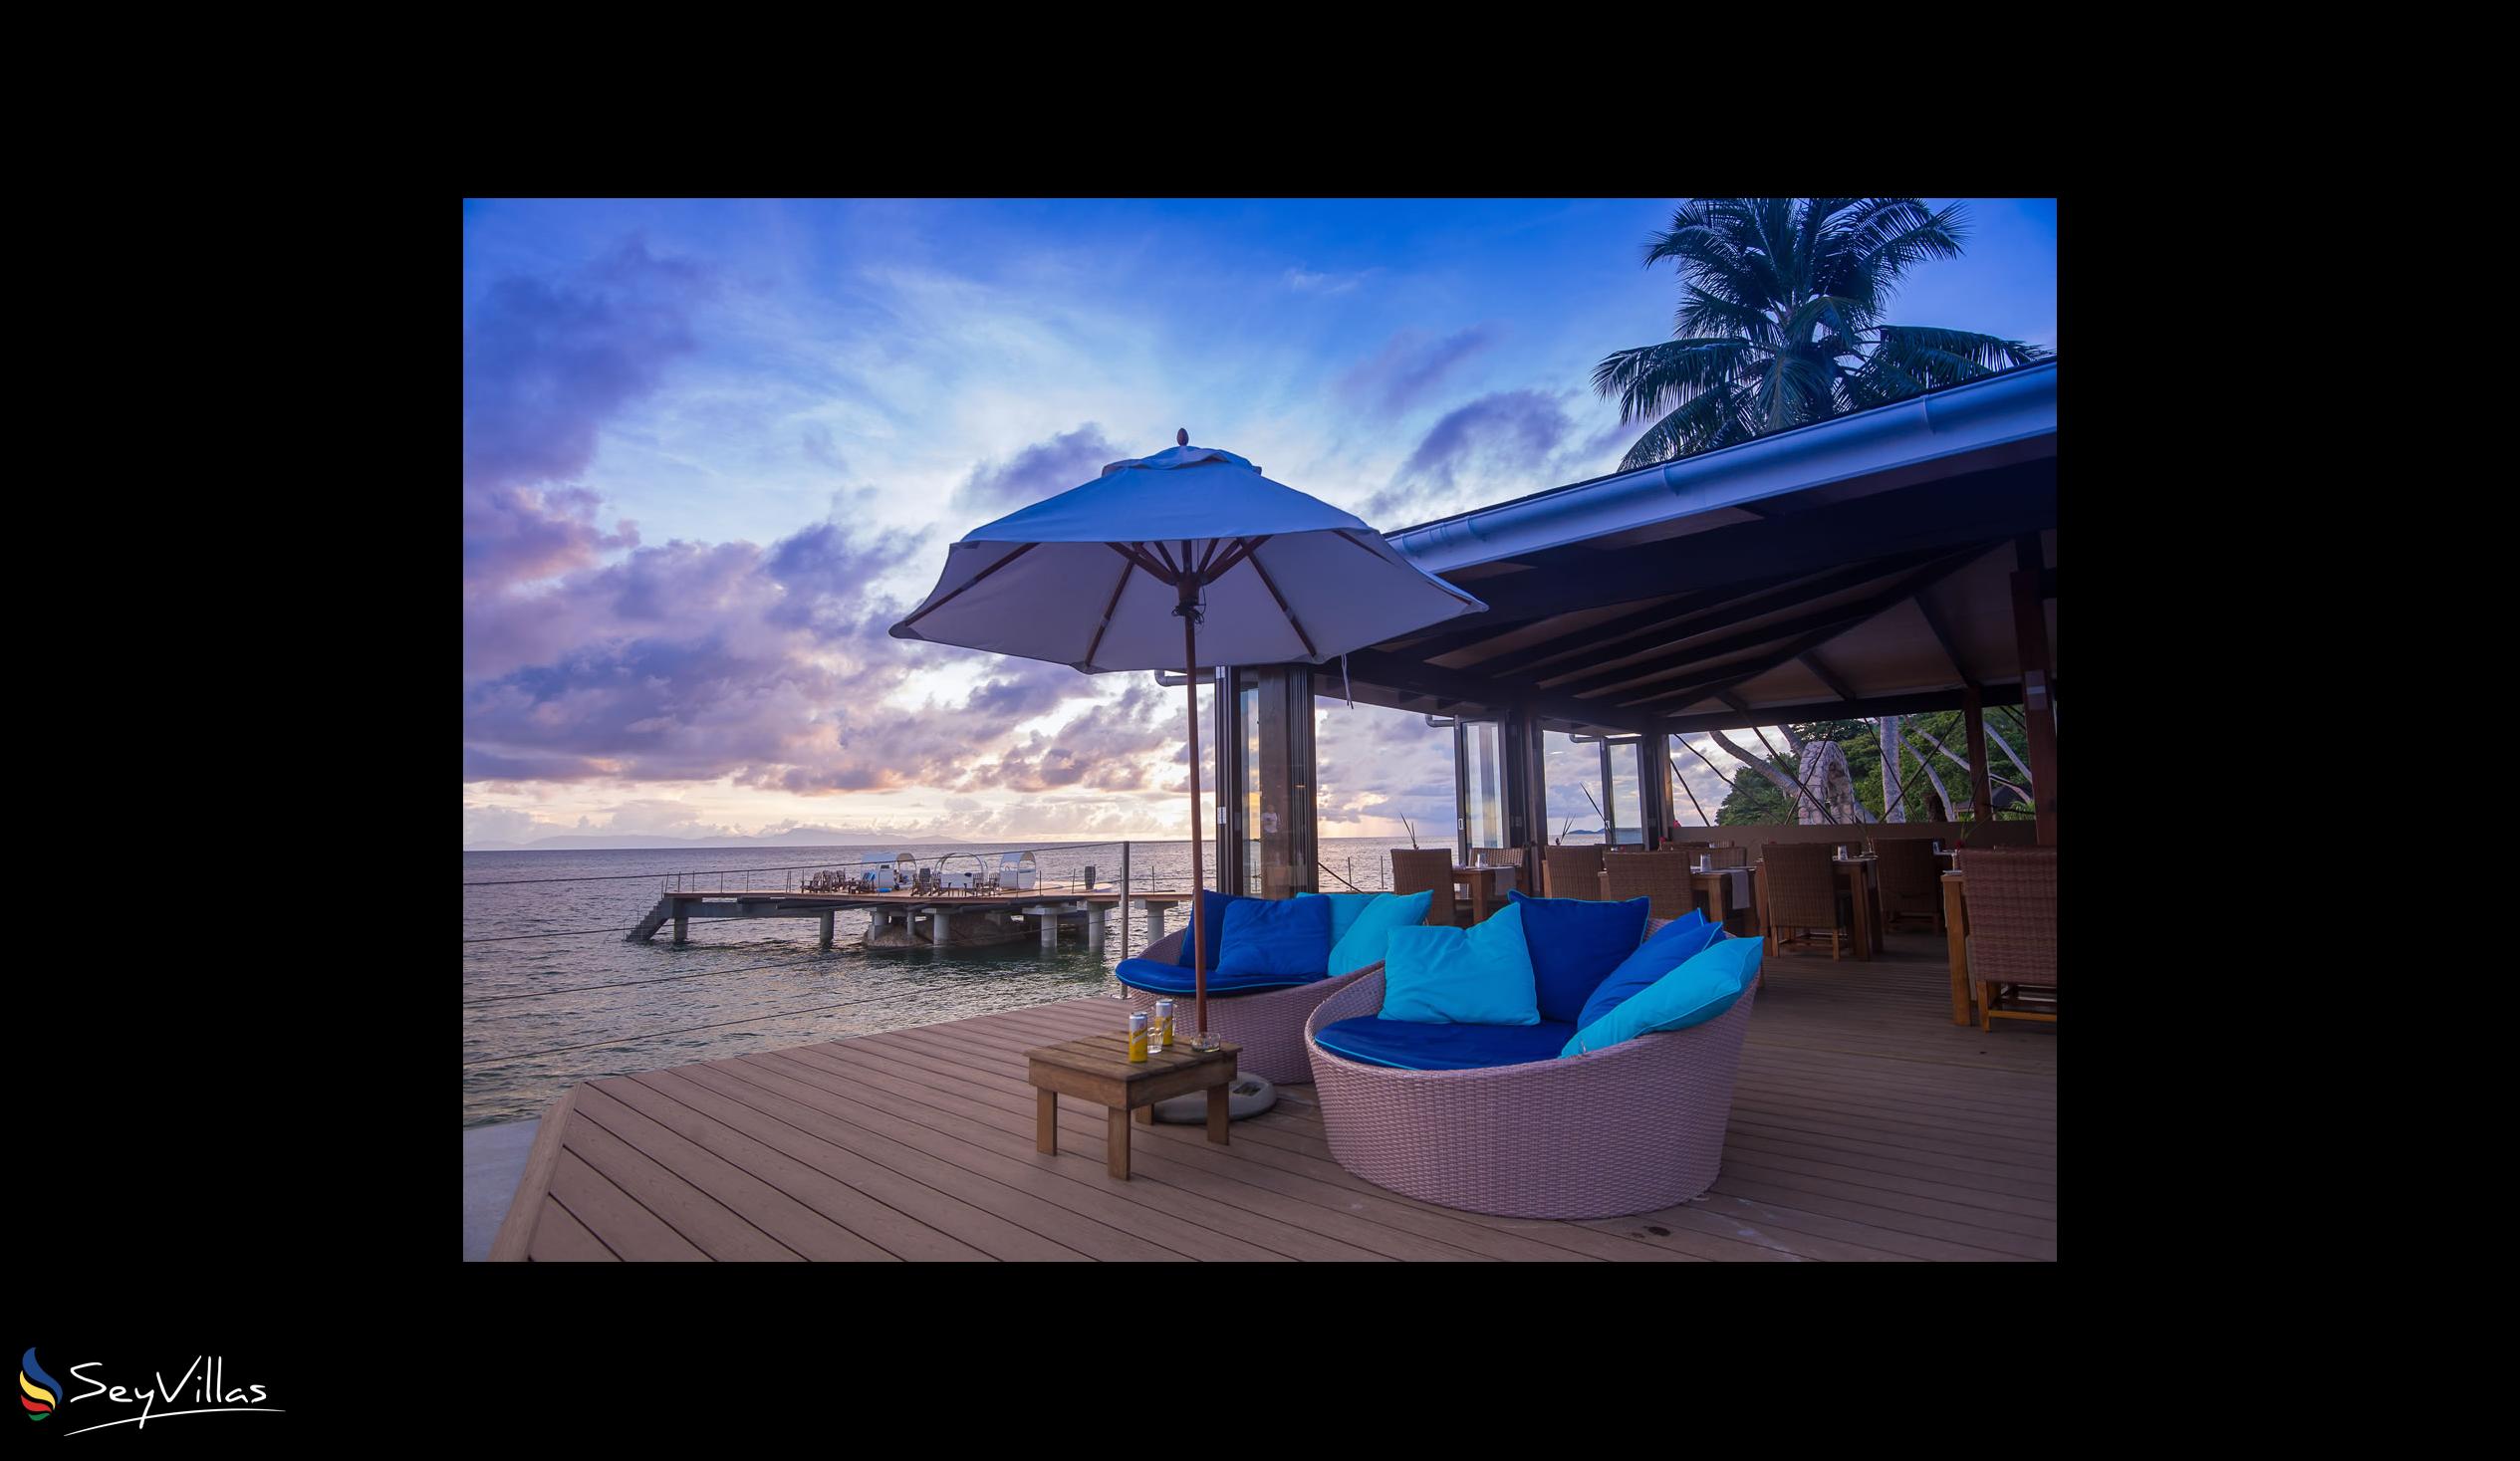 Photo 12: Coco de Mer & Black Parrot Suites - Outdoor area - Praslin (Seychelles)